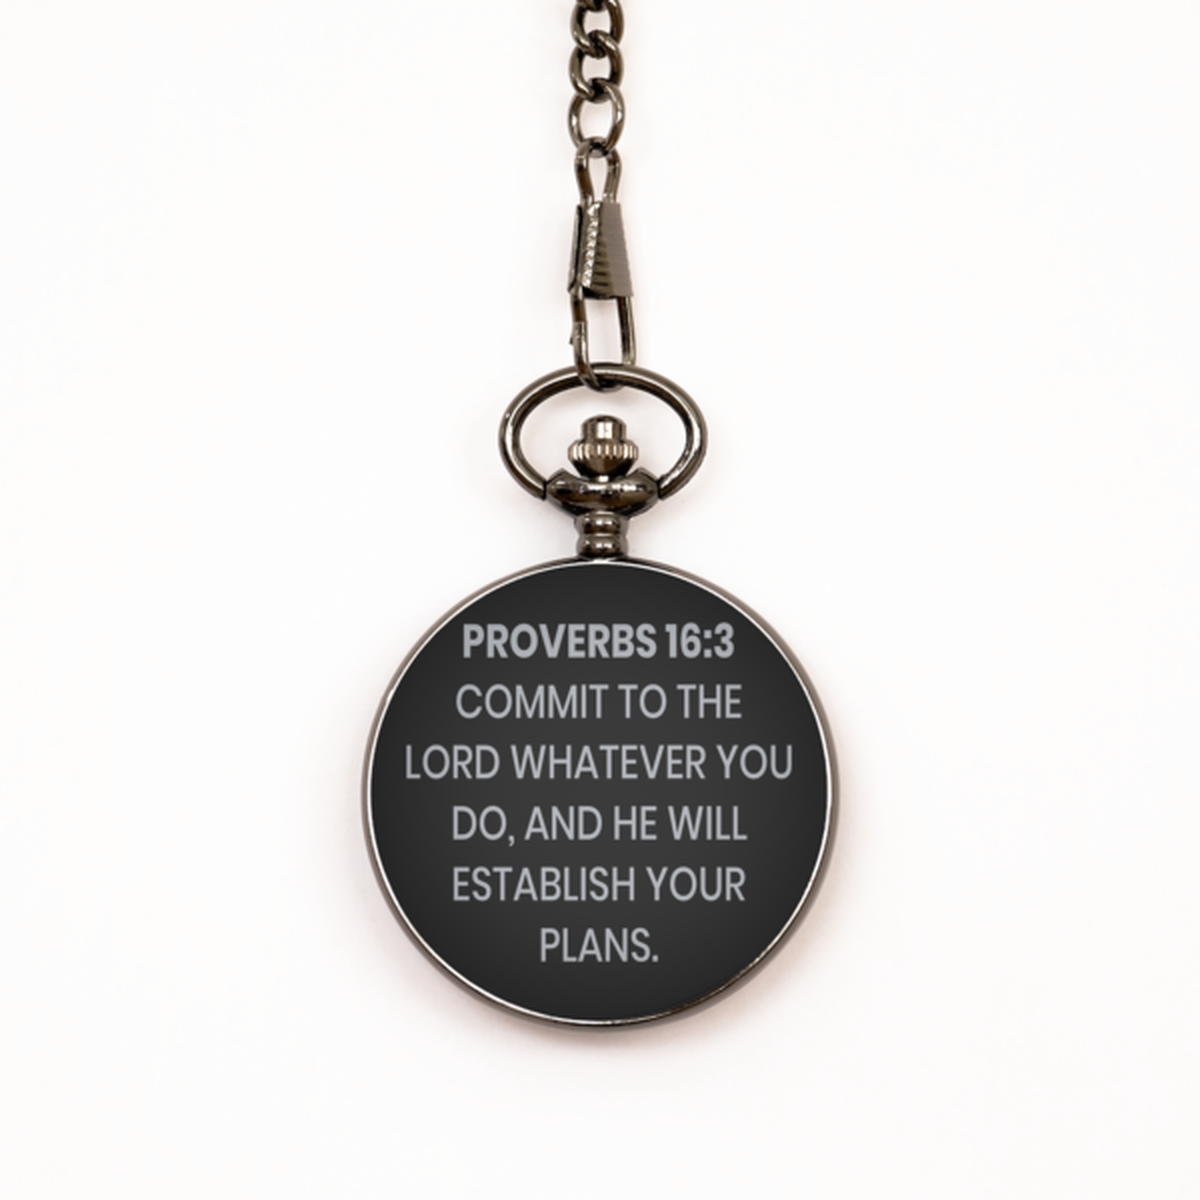 Proverbs 16:3 Pocket Watch, Bible Verse Pocket Watch, Christian Pocket Watch, Christian Birthday Gift, Engraved Pocket Watch, Gift for Christian.